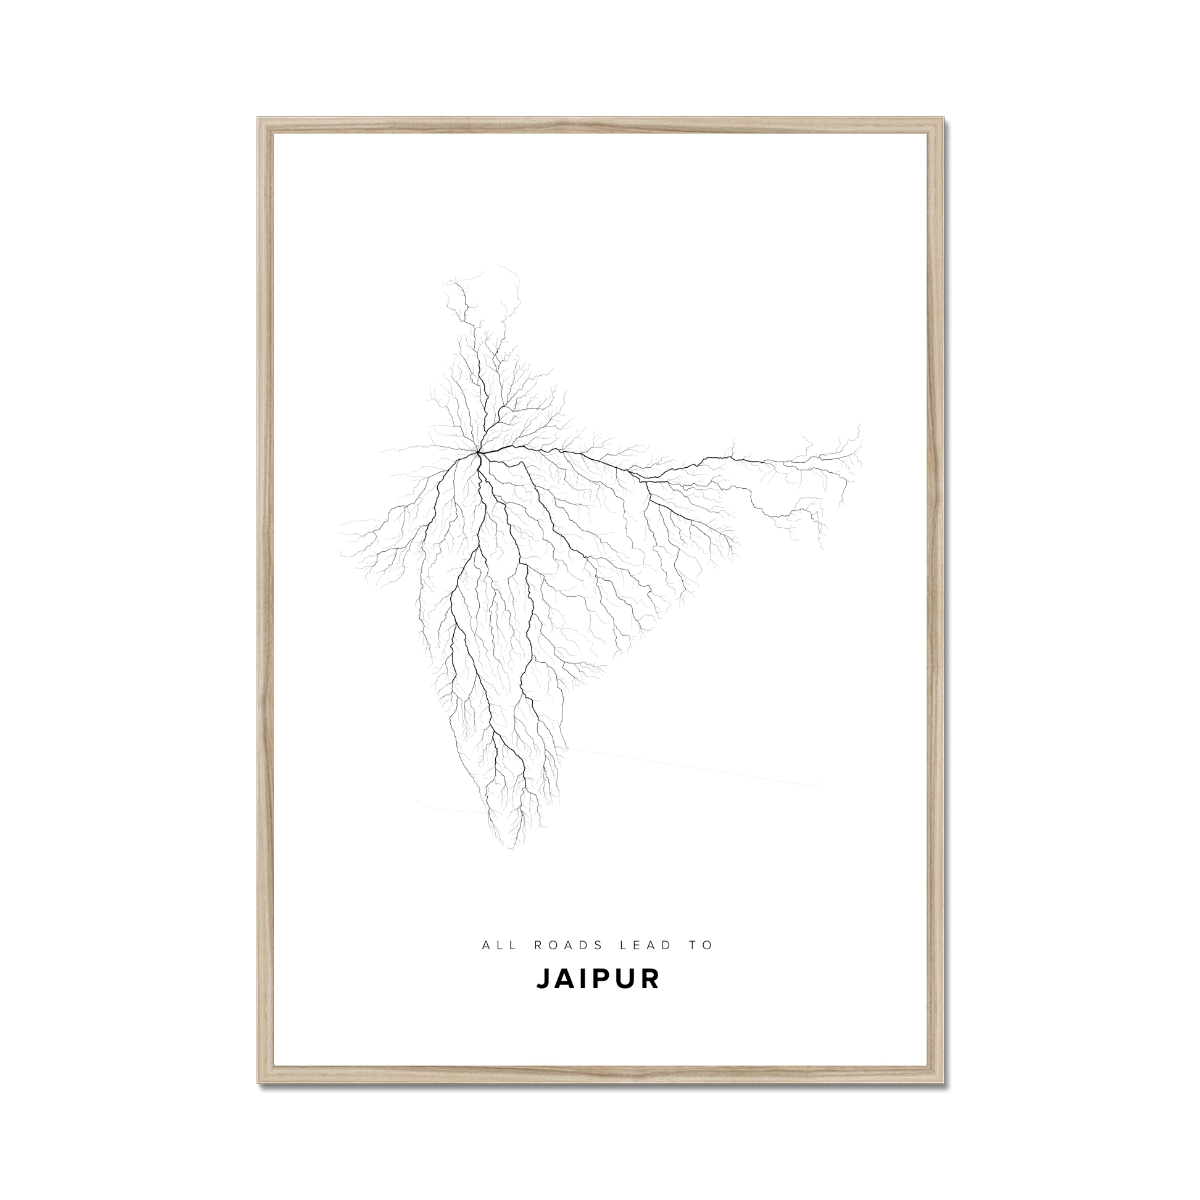 All roads lead to Jaipur (India) Fine Art Map Print